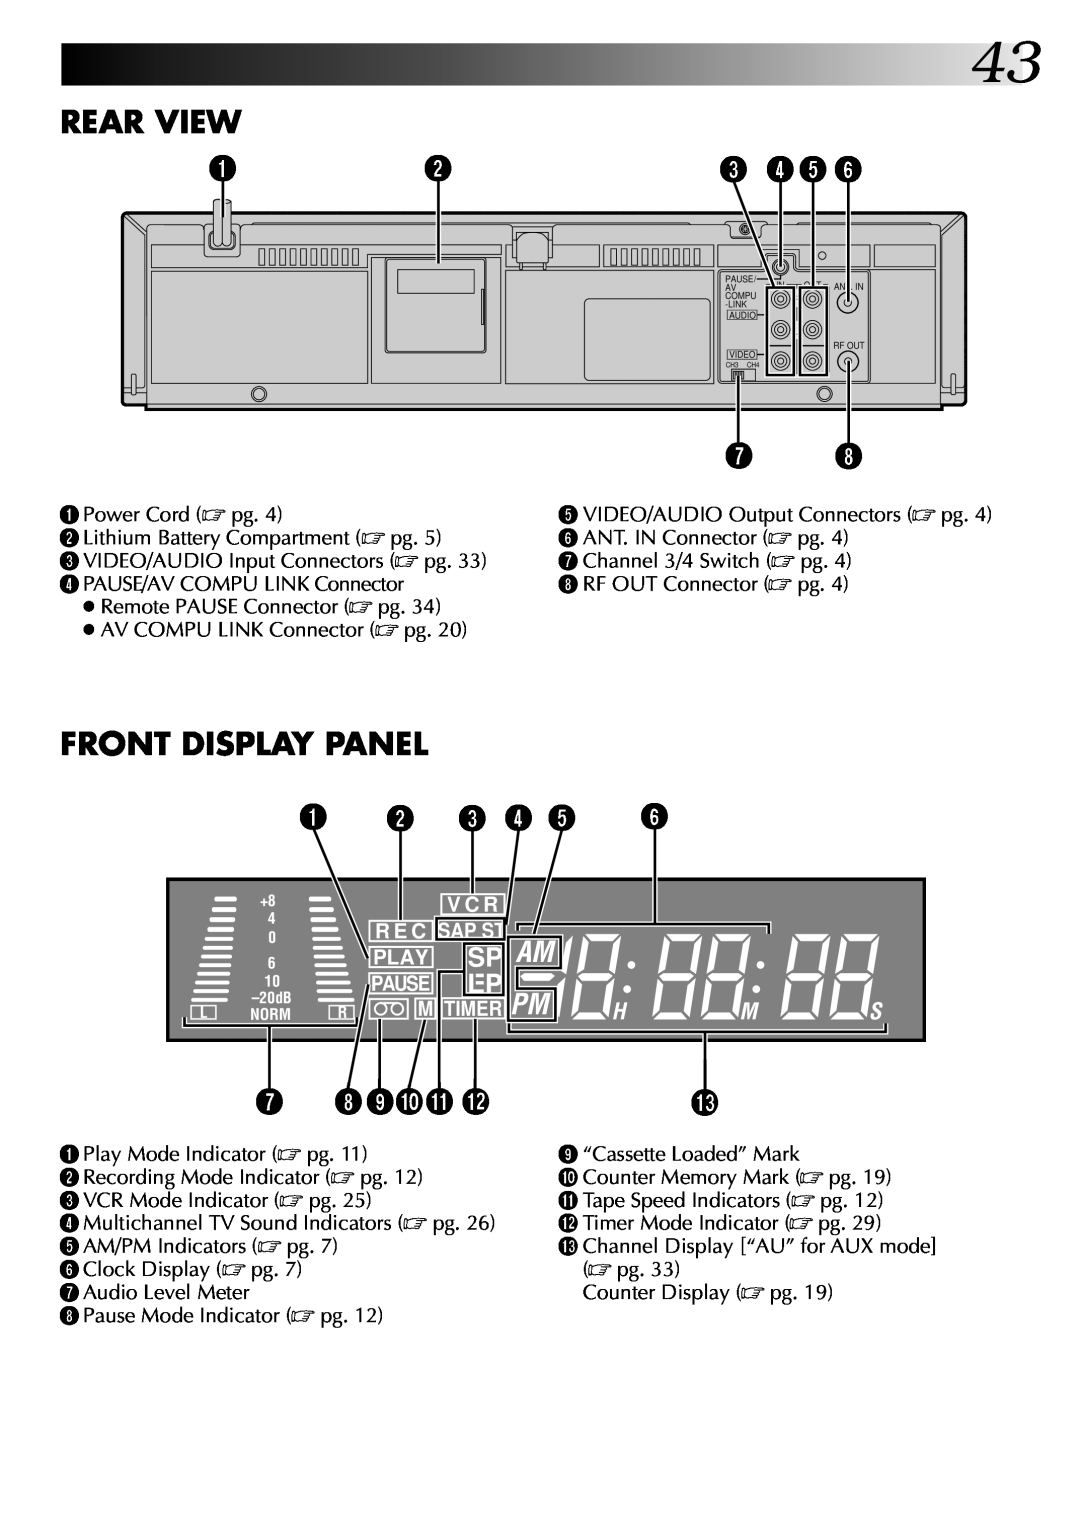 JVC HR-J7004UM manual Rear View, Front Display Panel, 3 4 5, 8 90! @, Sp Am, H M S, V C R, R E C Sap St, Play 